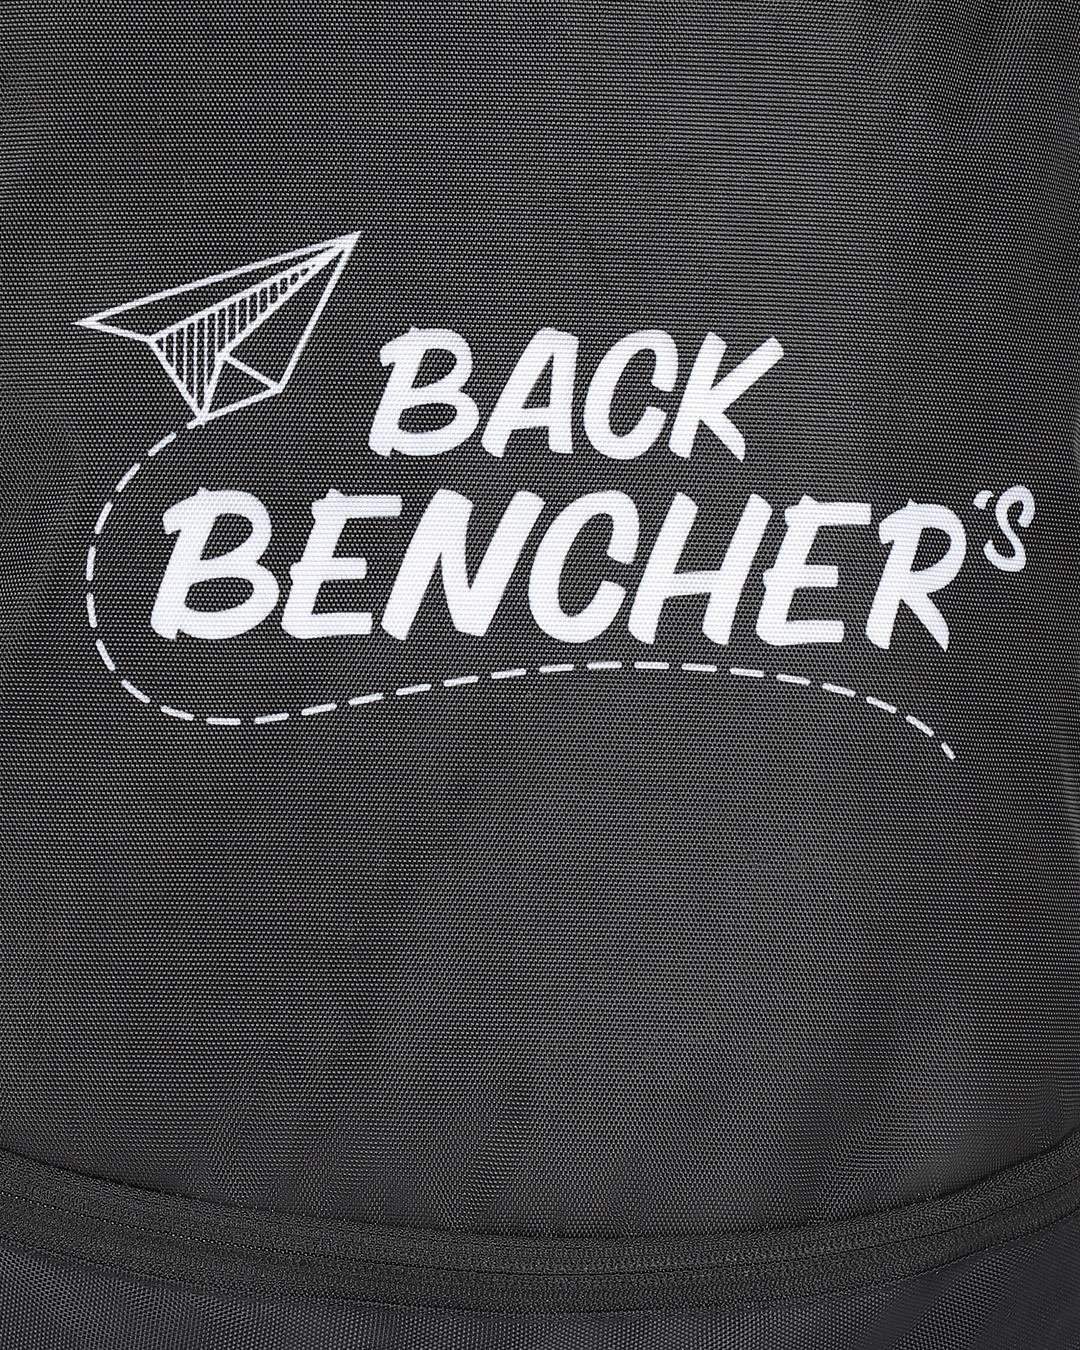 Backbenchers